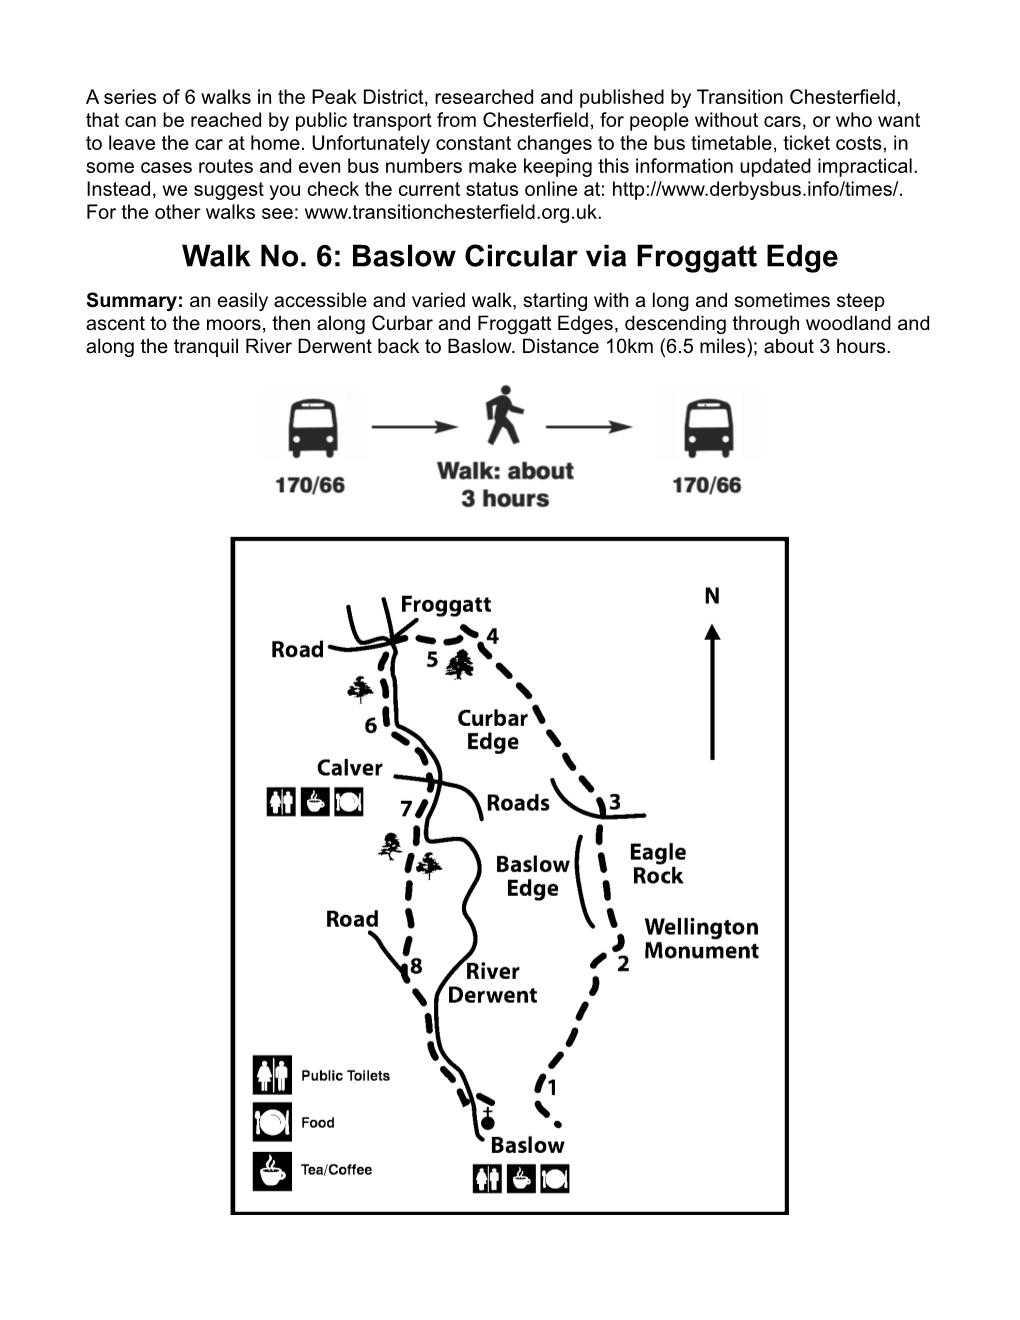 Walk No. 6: Baslow Circular Via Froggatt Edge